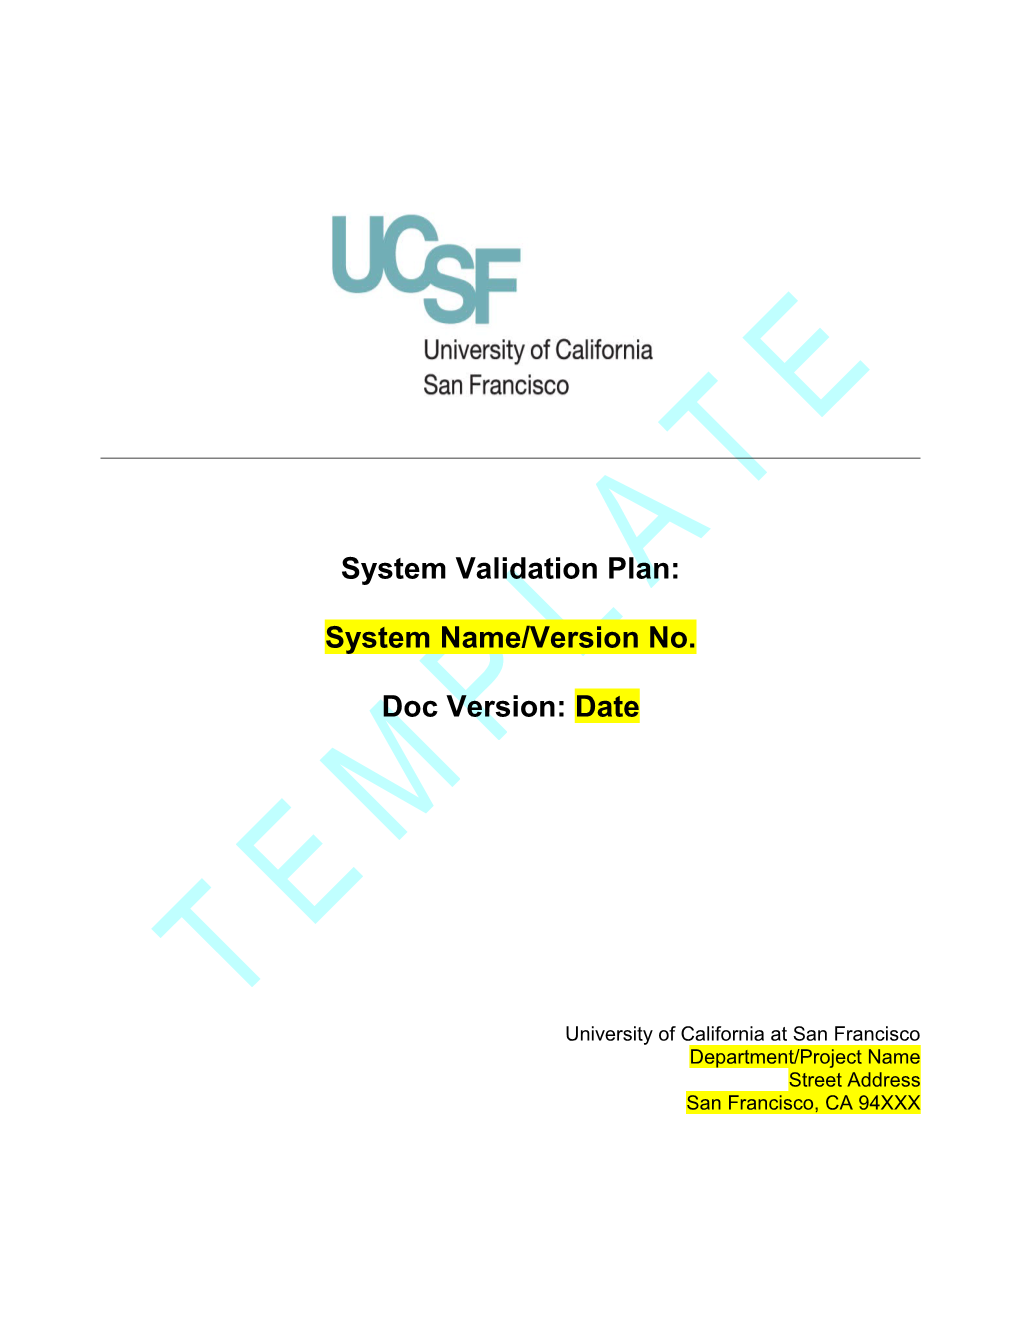 System Validation Plan for System Name/Version